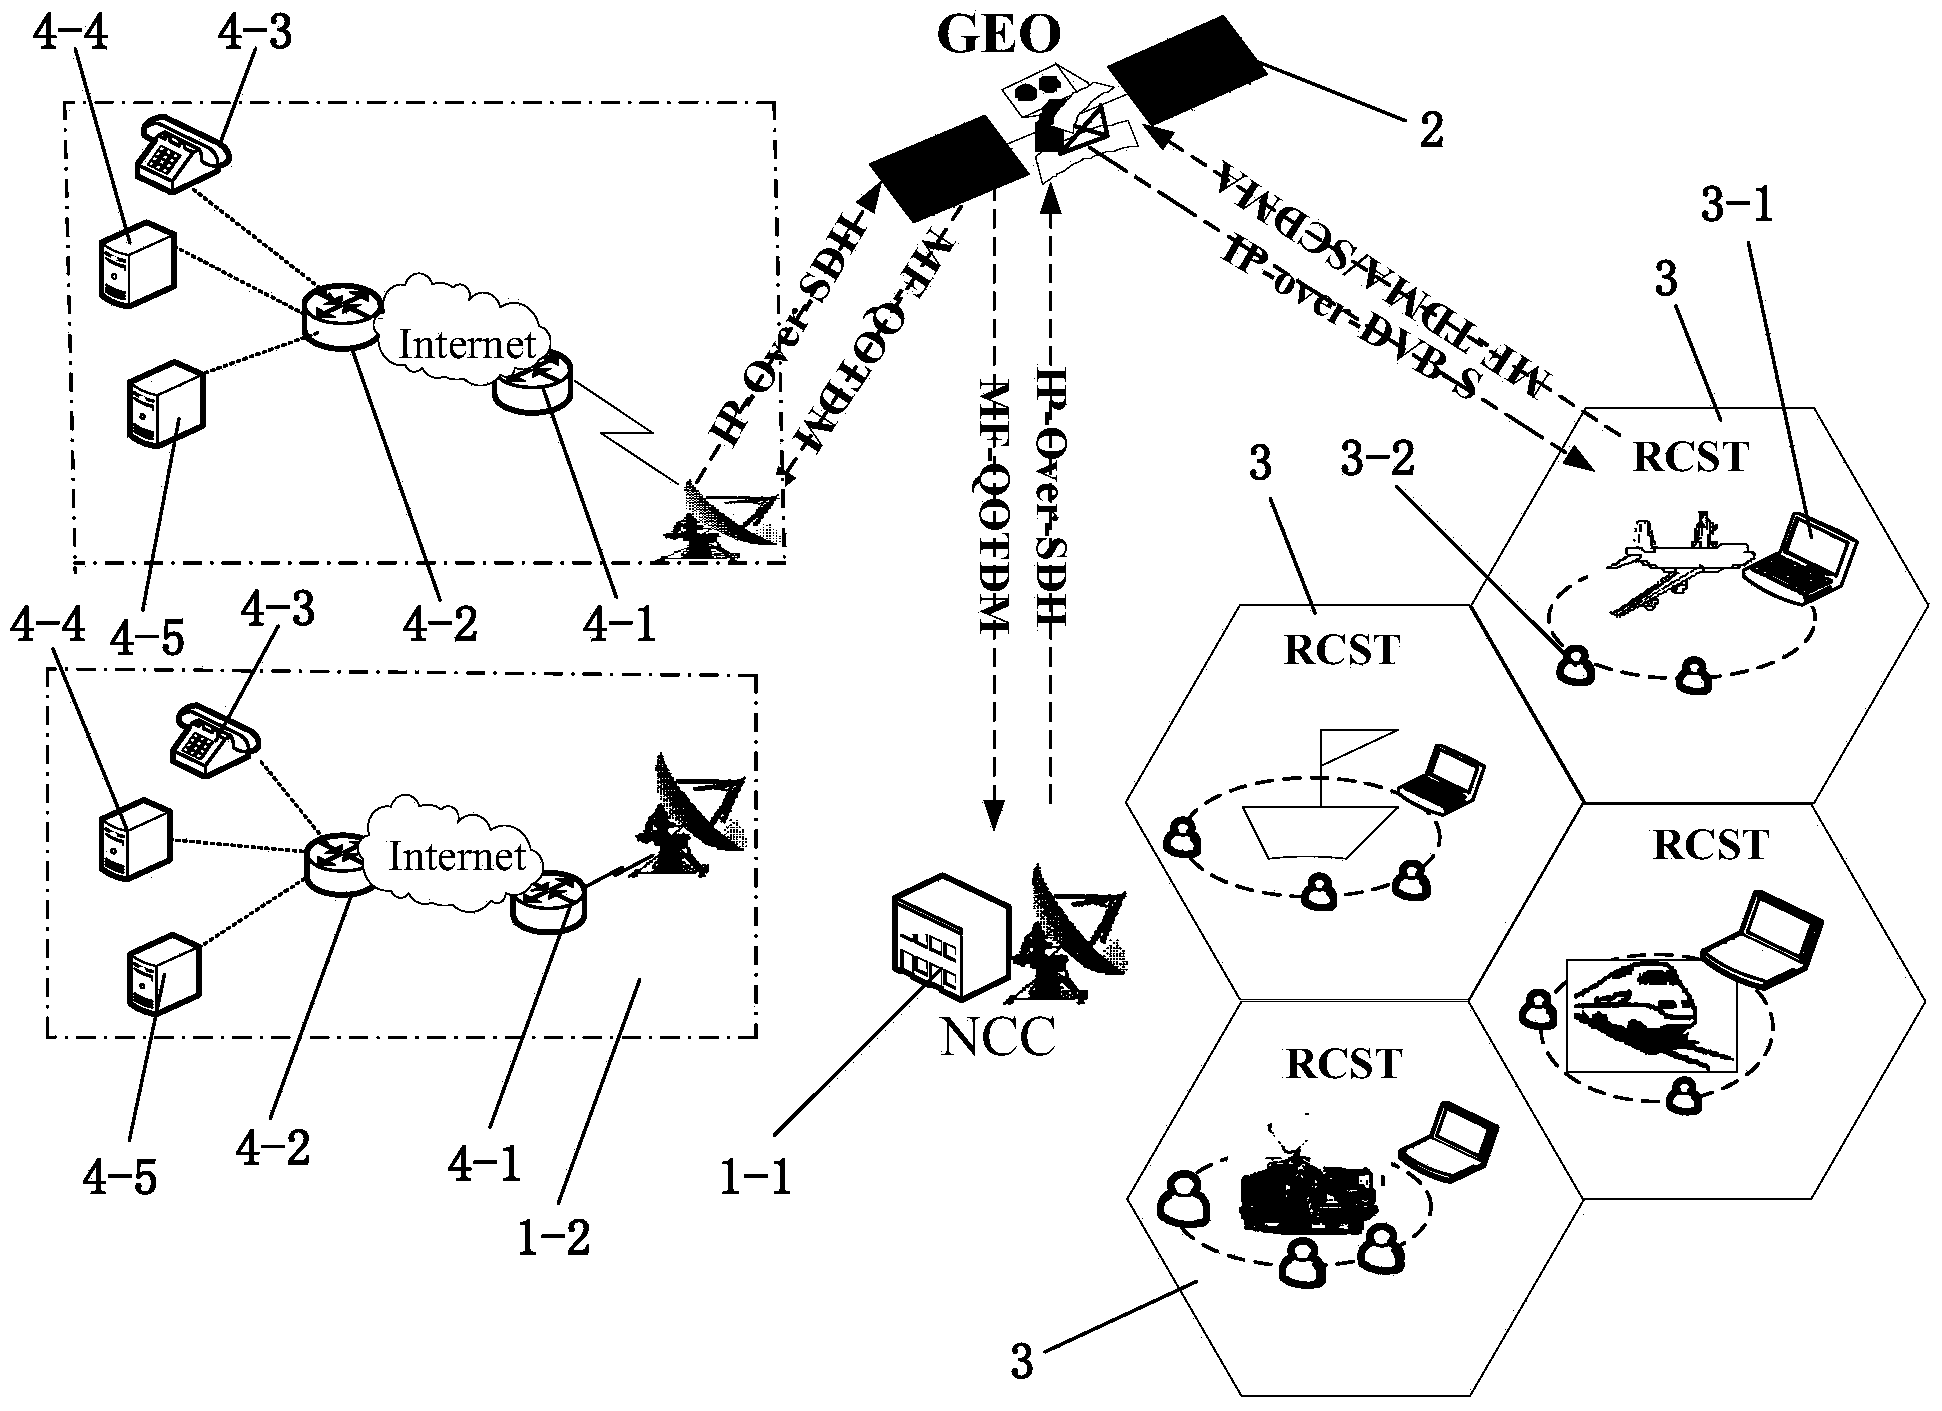 Broadband mobile communication method and system based on multi-beam GEO satellite